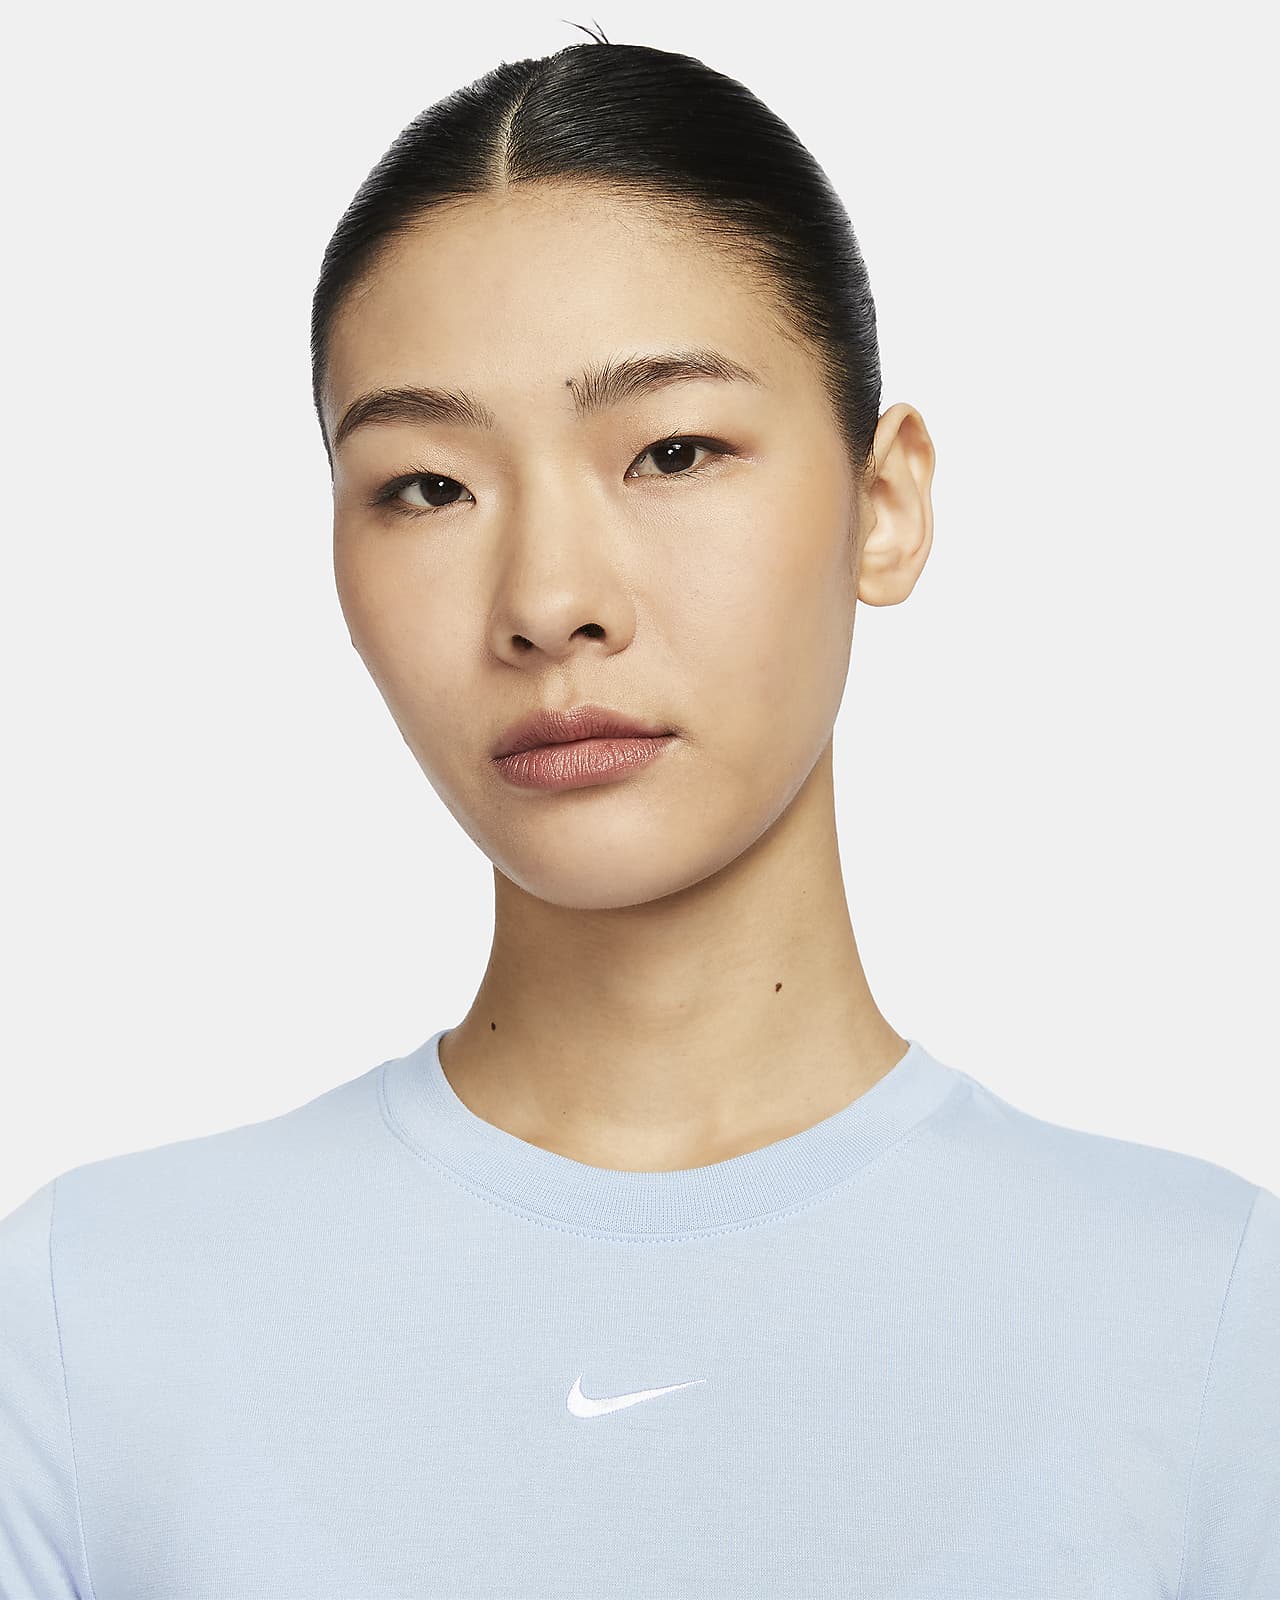 Nike Crop Tops - Women - Philippines price